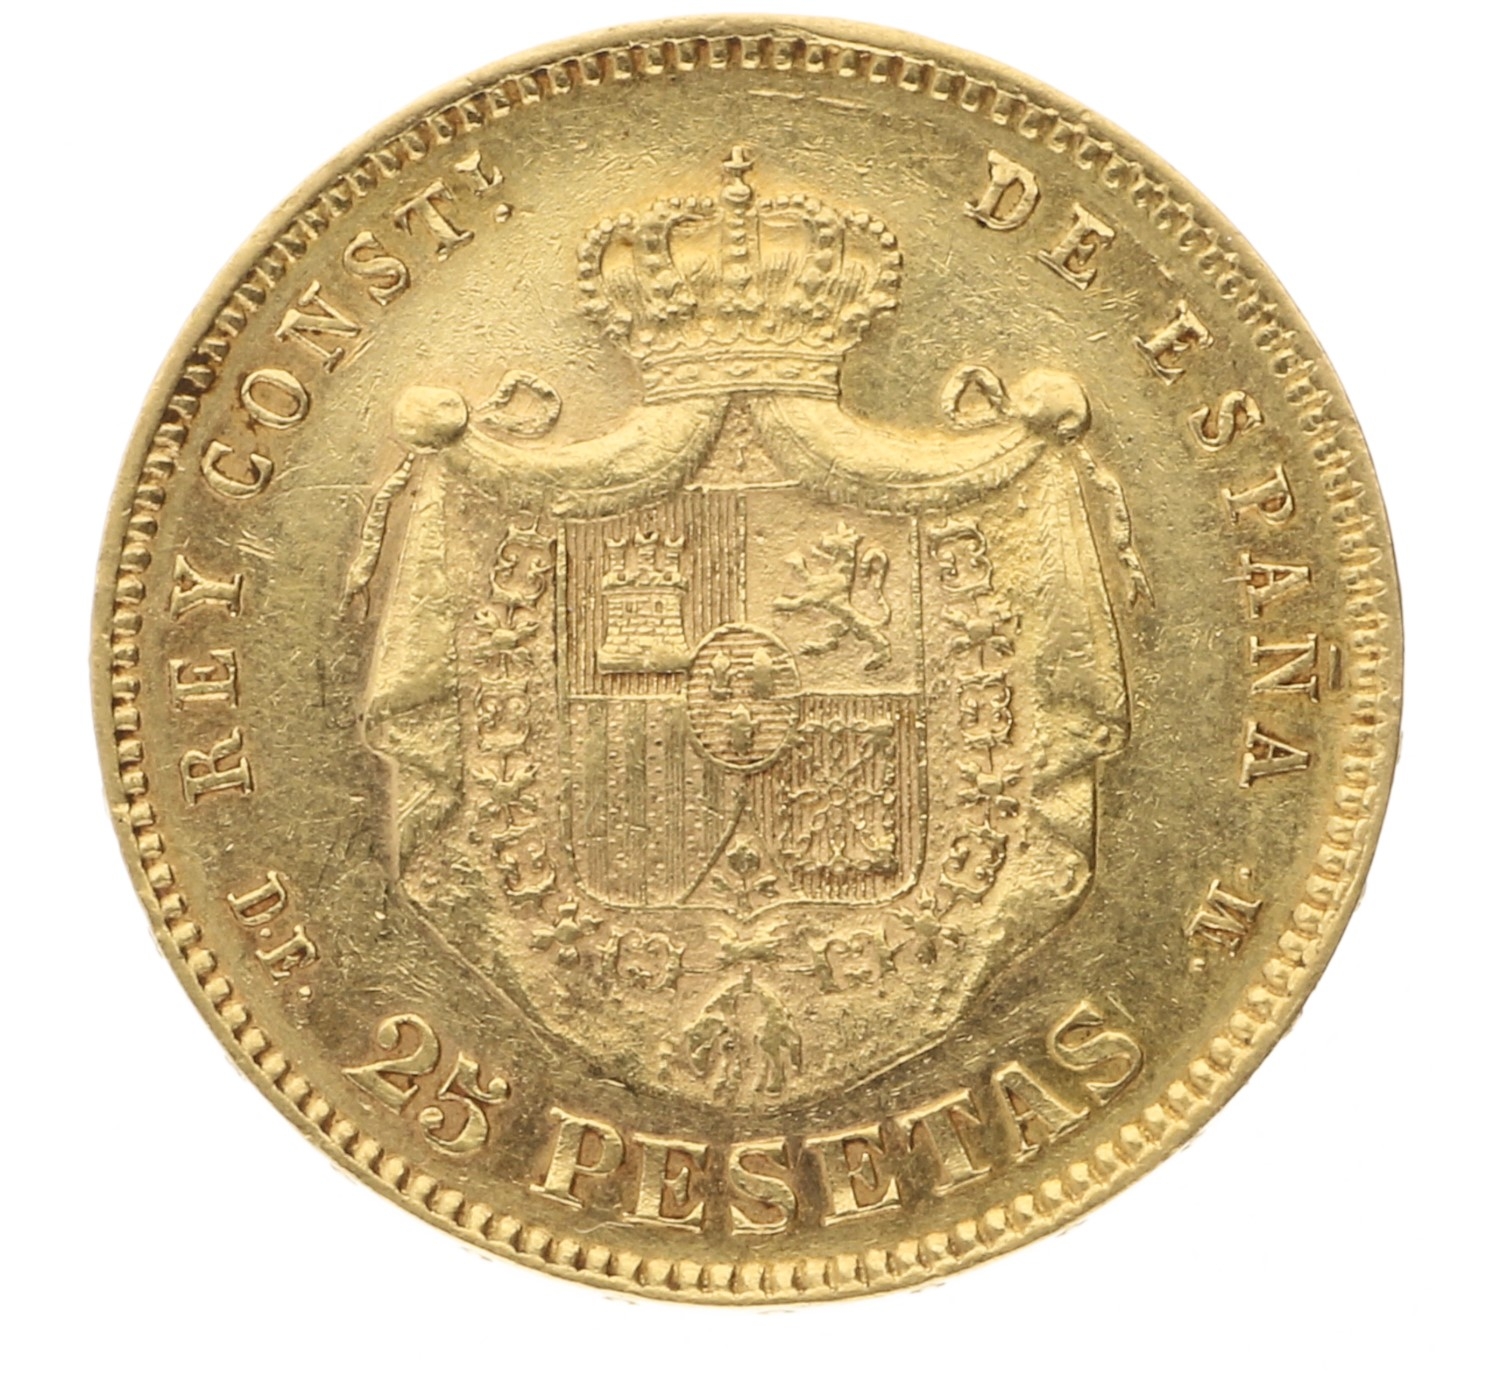 25 Pesetas - Spain - 1877